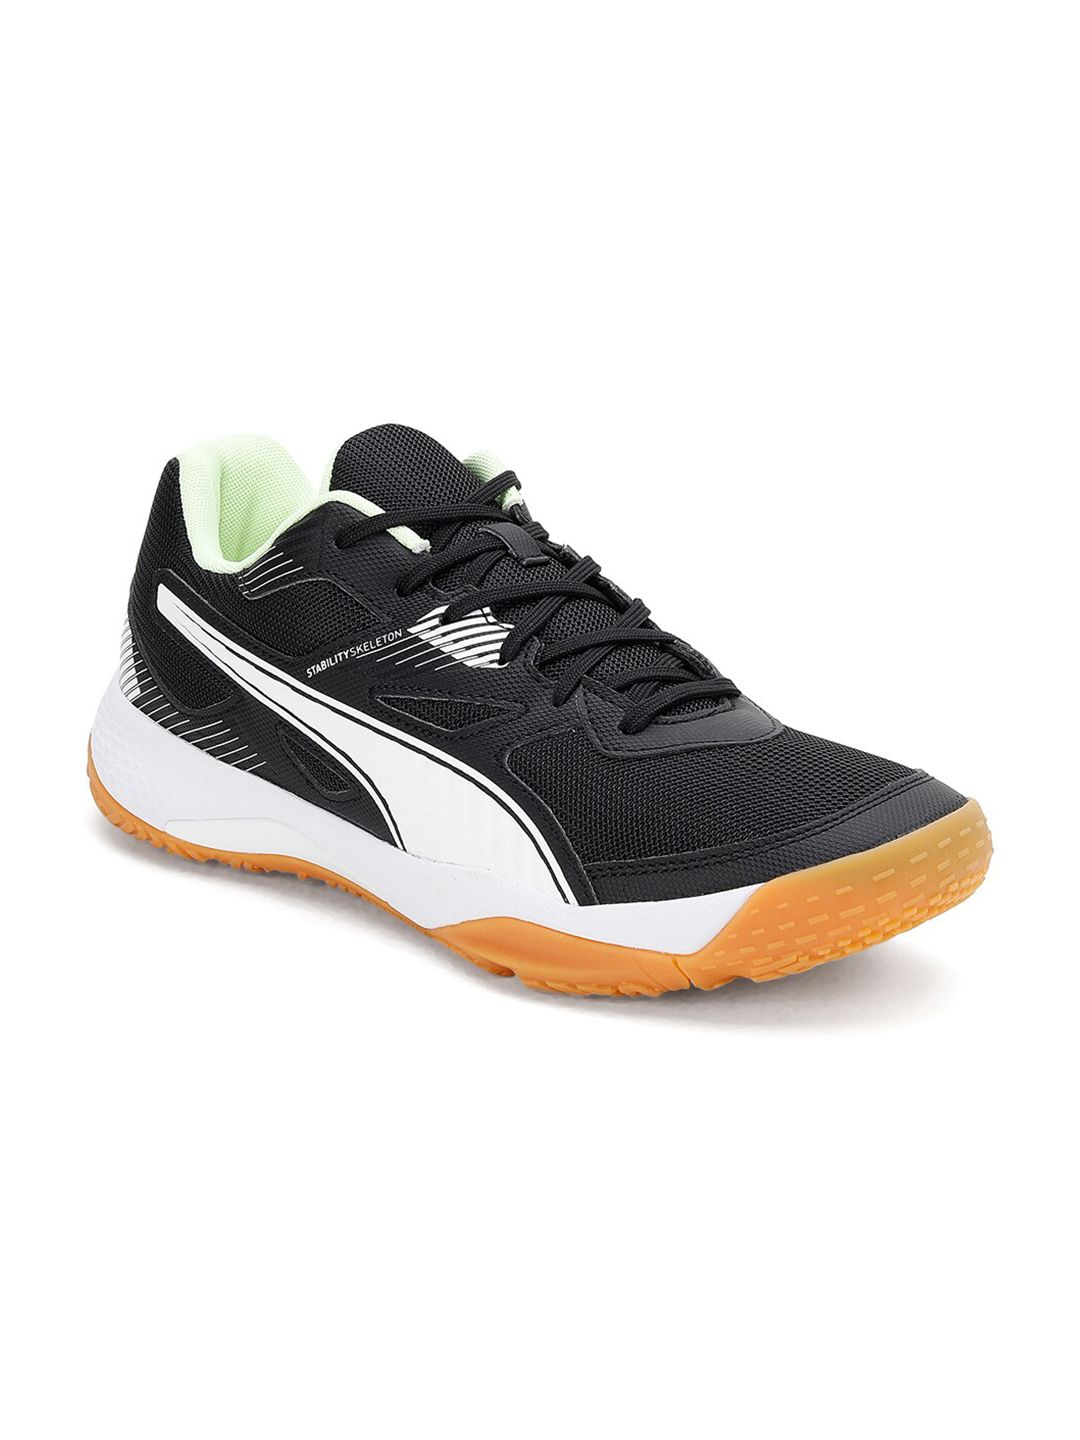 Puma Unisex Black Sports Shoes Price in India